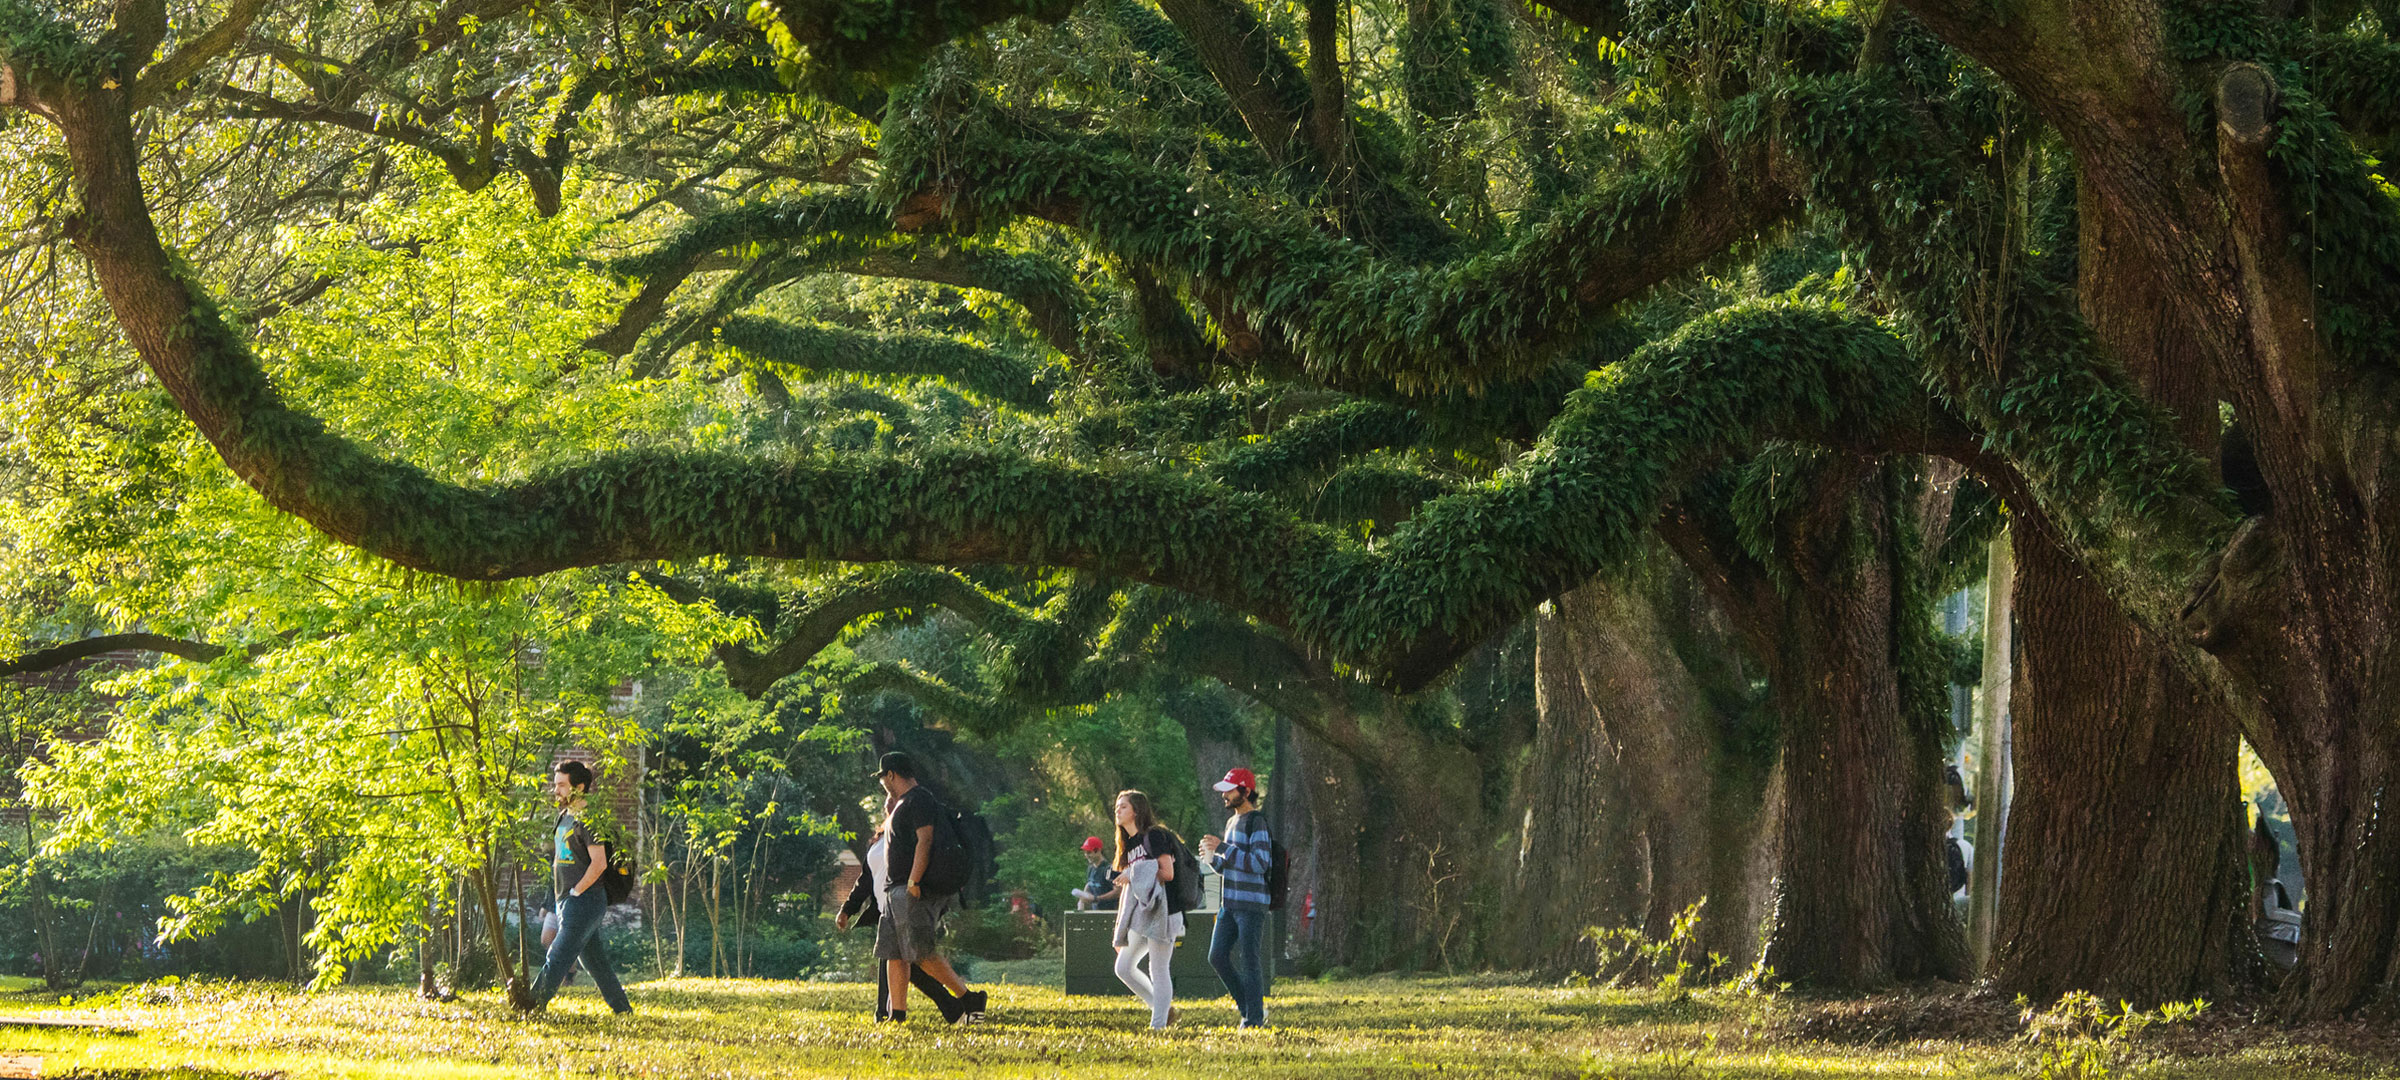 University of Louisiana at Lafayette students walking under the large oak trees on campus